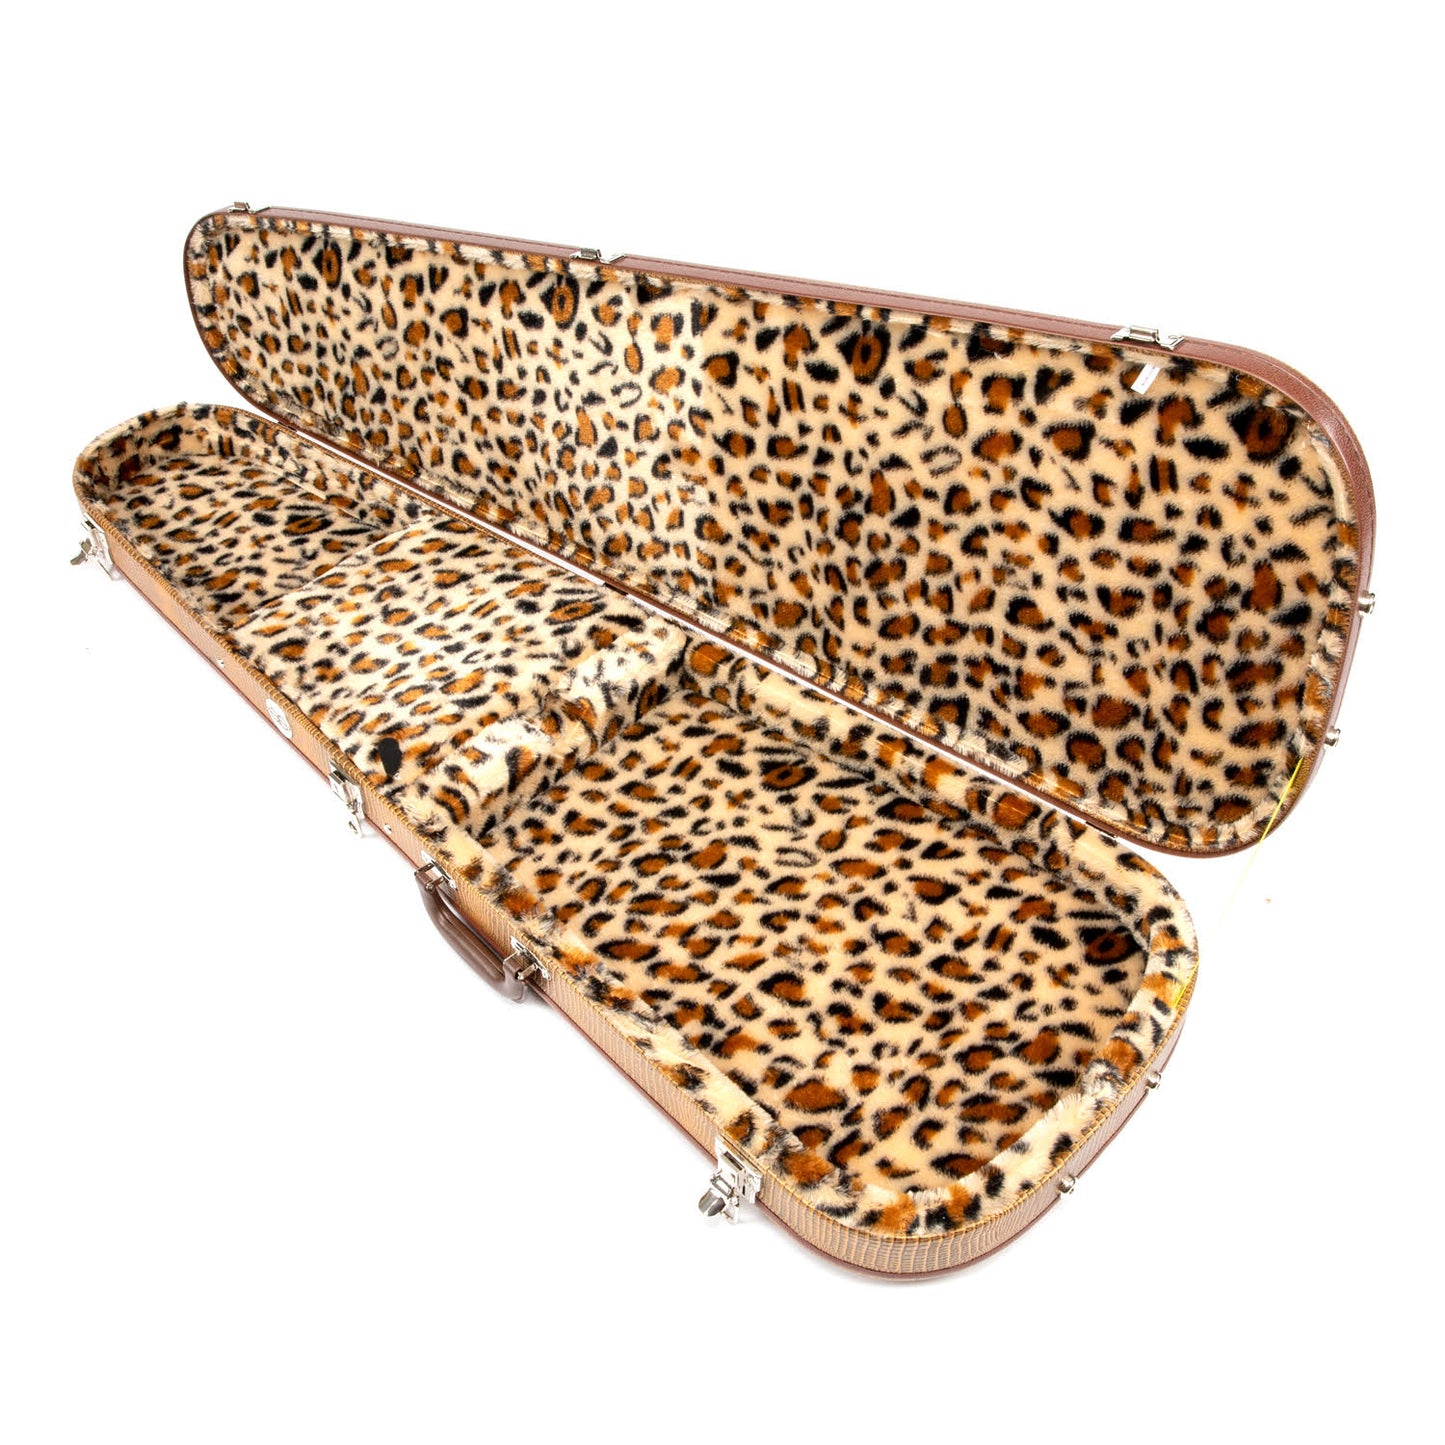 Allen Eden Snake Skin Teardrop Bass Case with Leopard Plush Lining